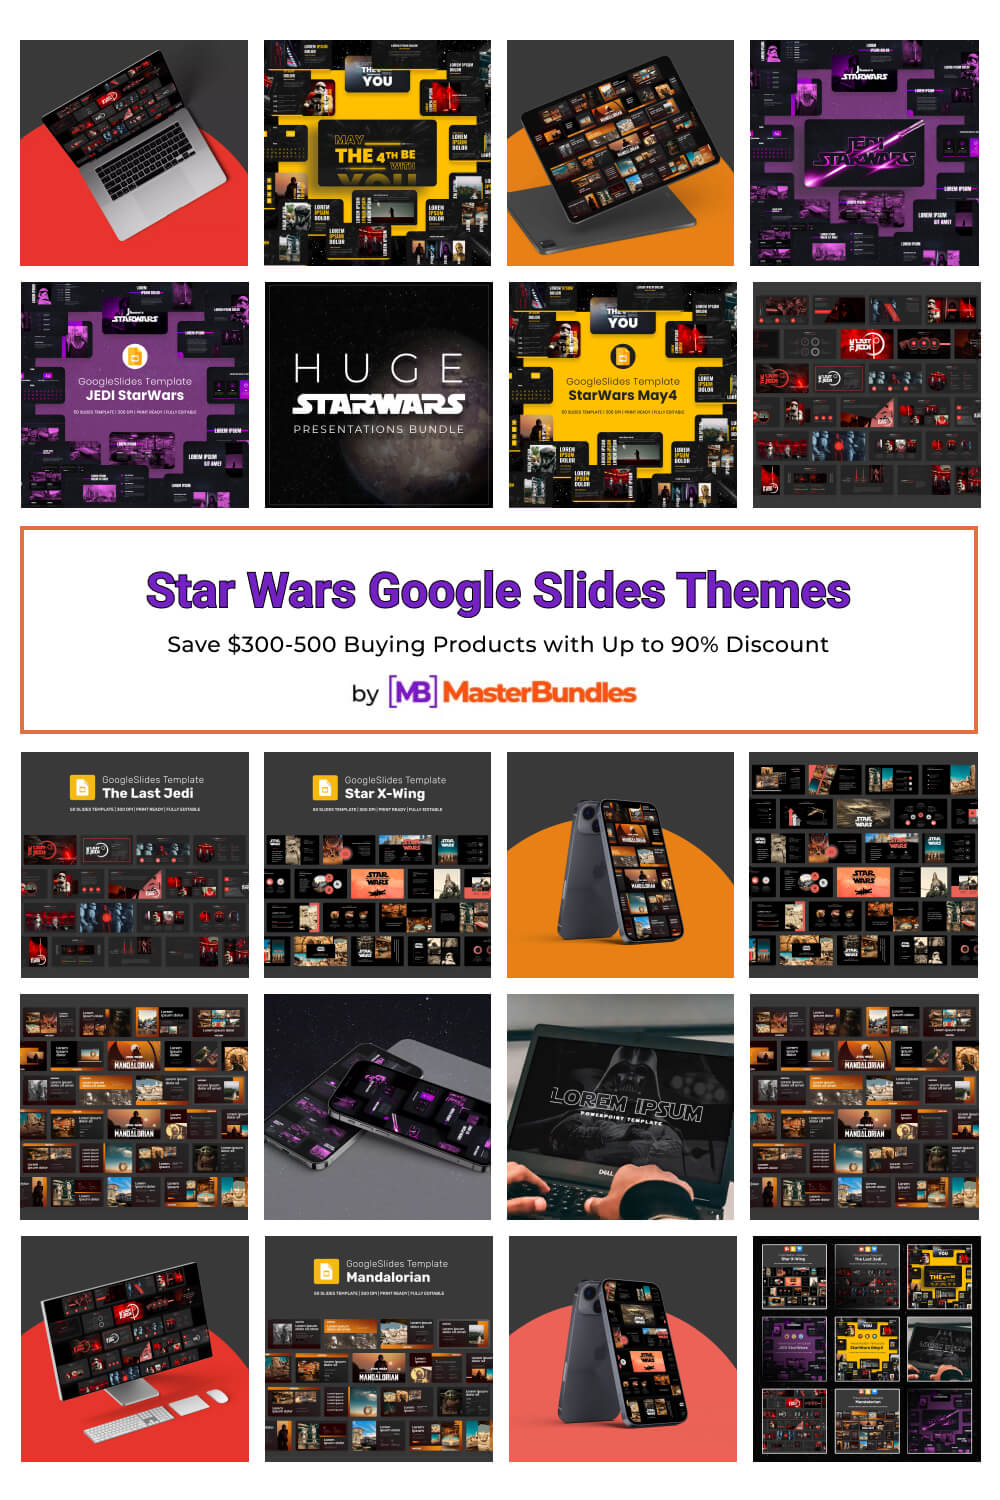 star wars google slides themes pinterest image.